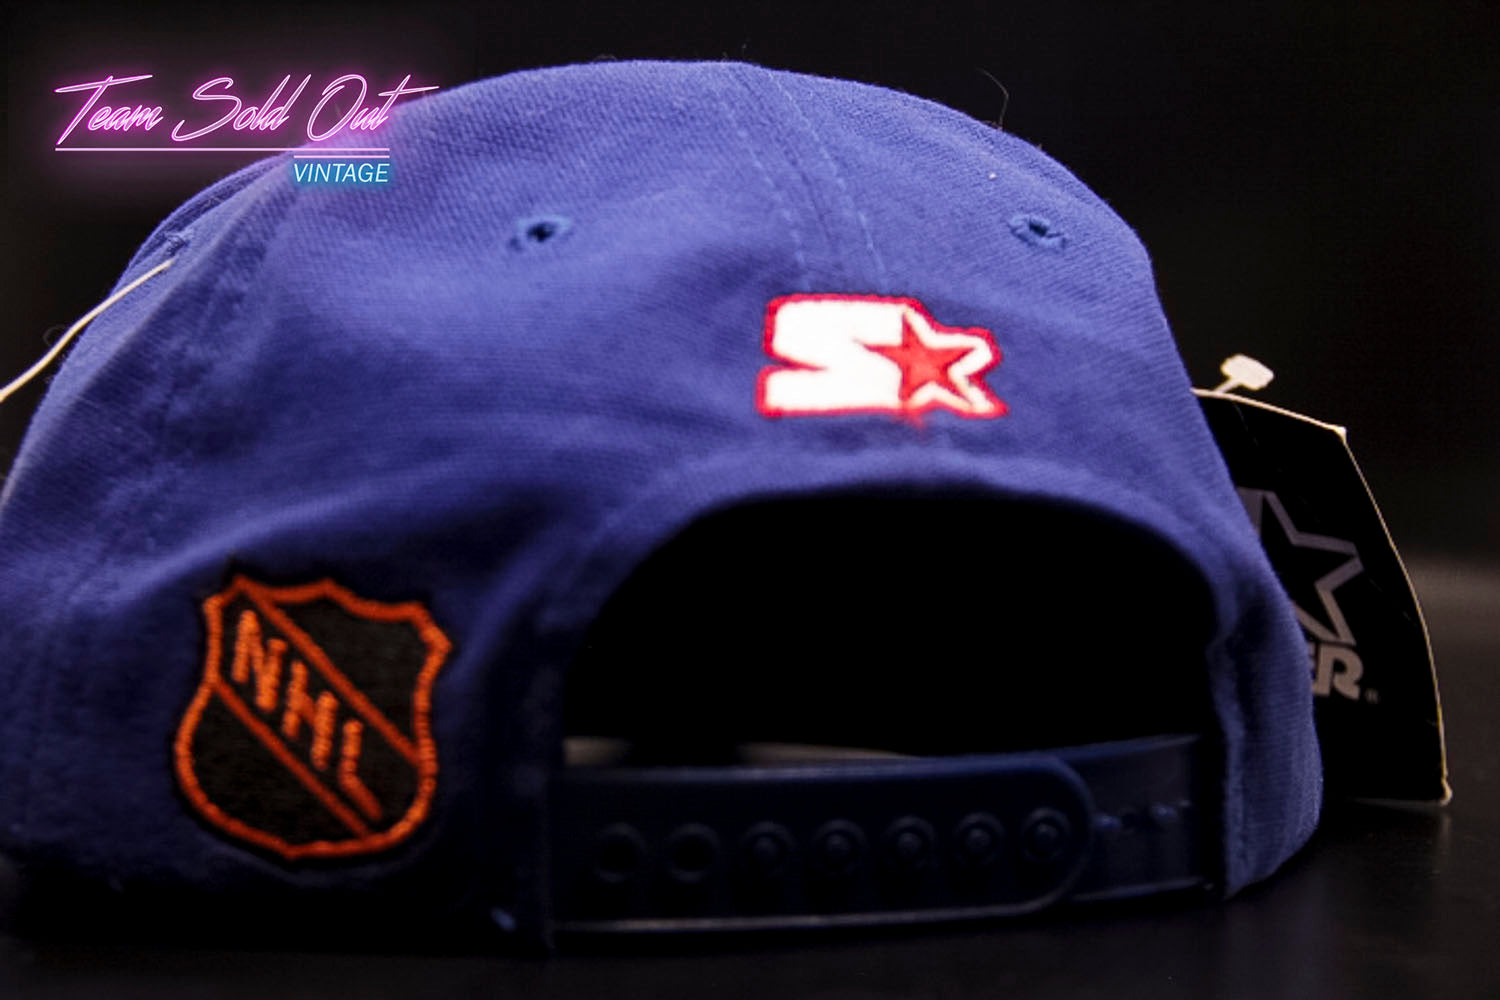 Vintage Hockey Hats, Vintage Hockey Caps, Beanie, Snapbacks